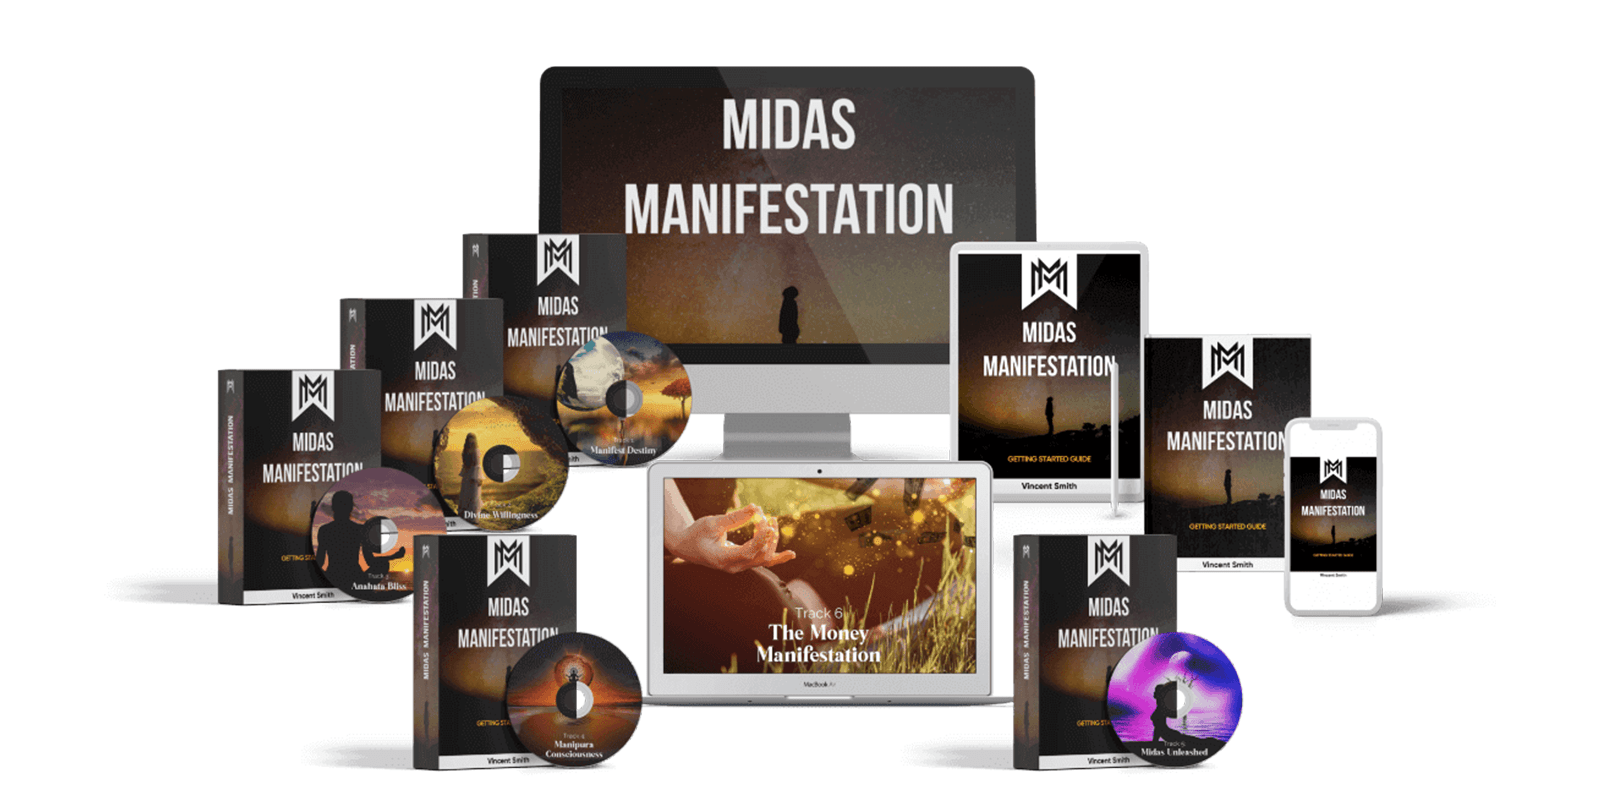 Midas Manifestation PDF Download Reviews - Does Vincent Smith's System Work?